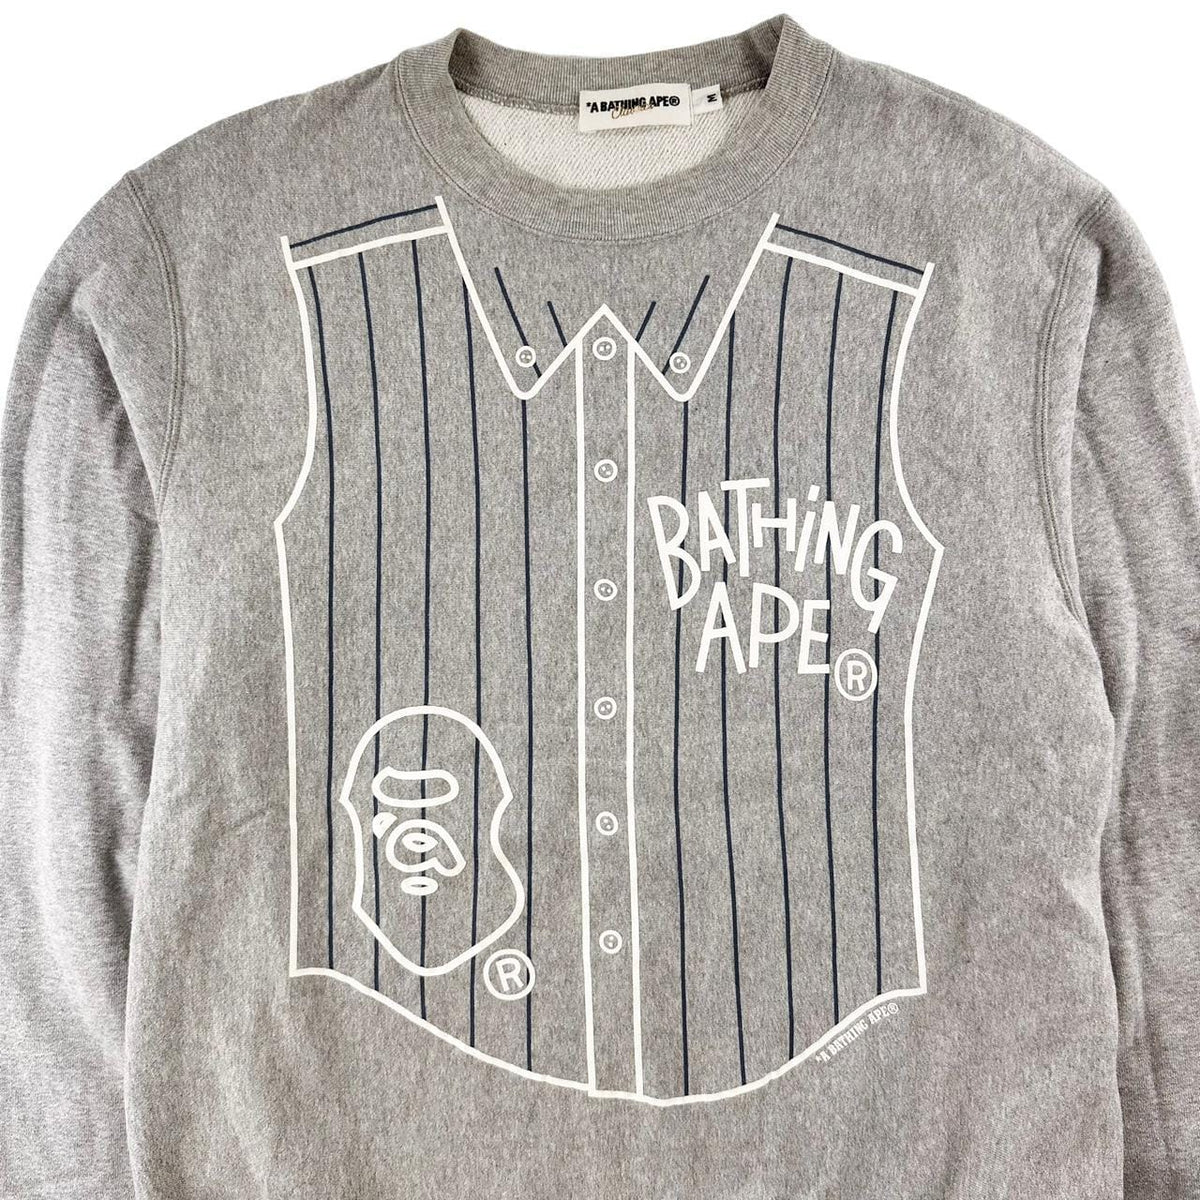 Bape shirt print jumper sweatshirt size M